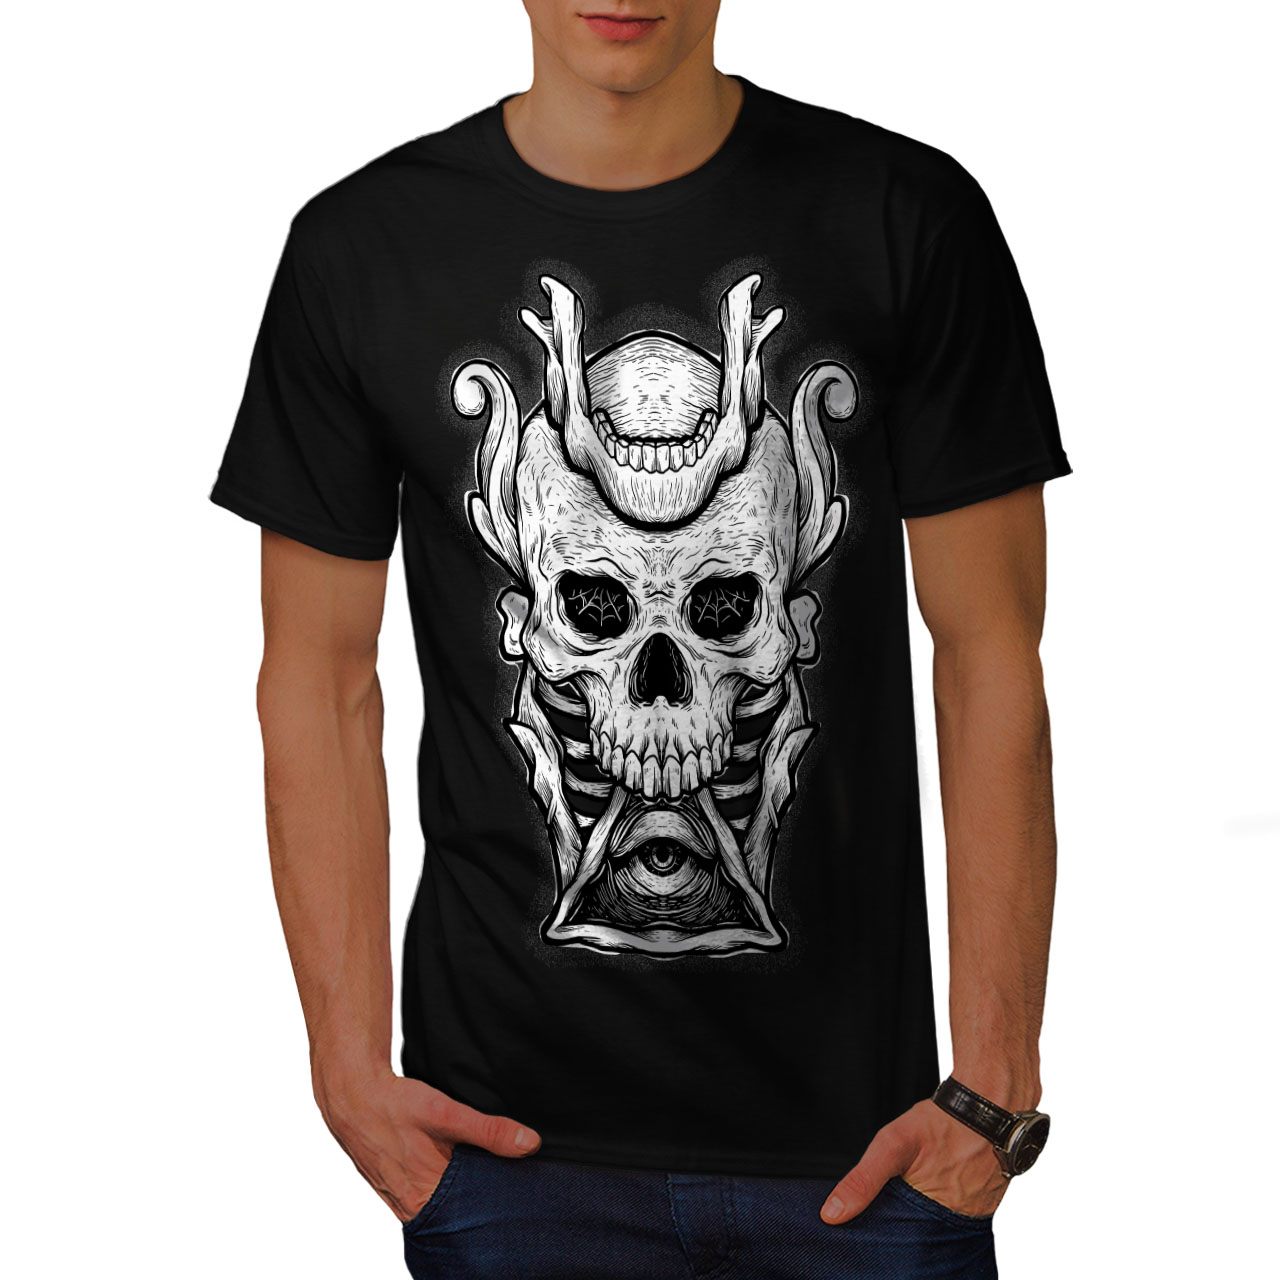 Wellcoda Cool Skull Mens T-shirt, Triangle Eye Graphic Design Printed ...